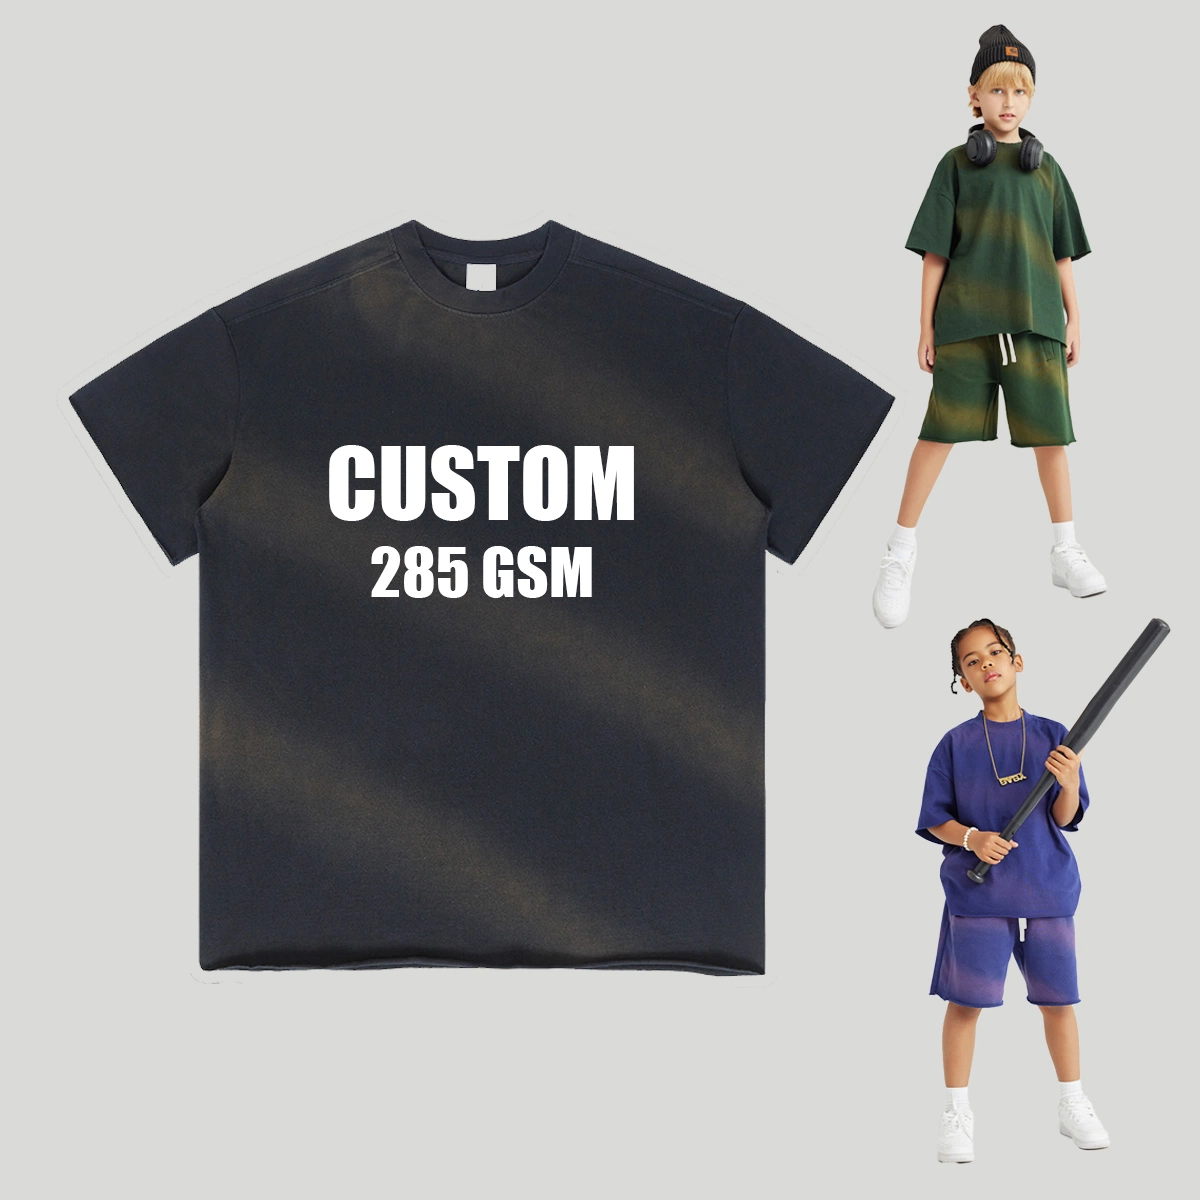 285GSM 100cotton Wholesale Customized Design Logo Cotton Cheap Tees Plain Blank Sport Sports Gym Fitness Fashion Children Wear